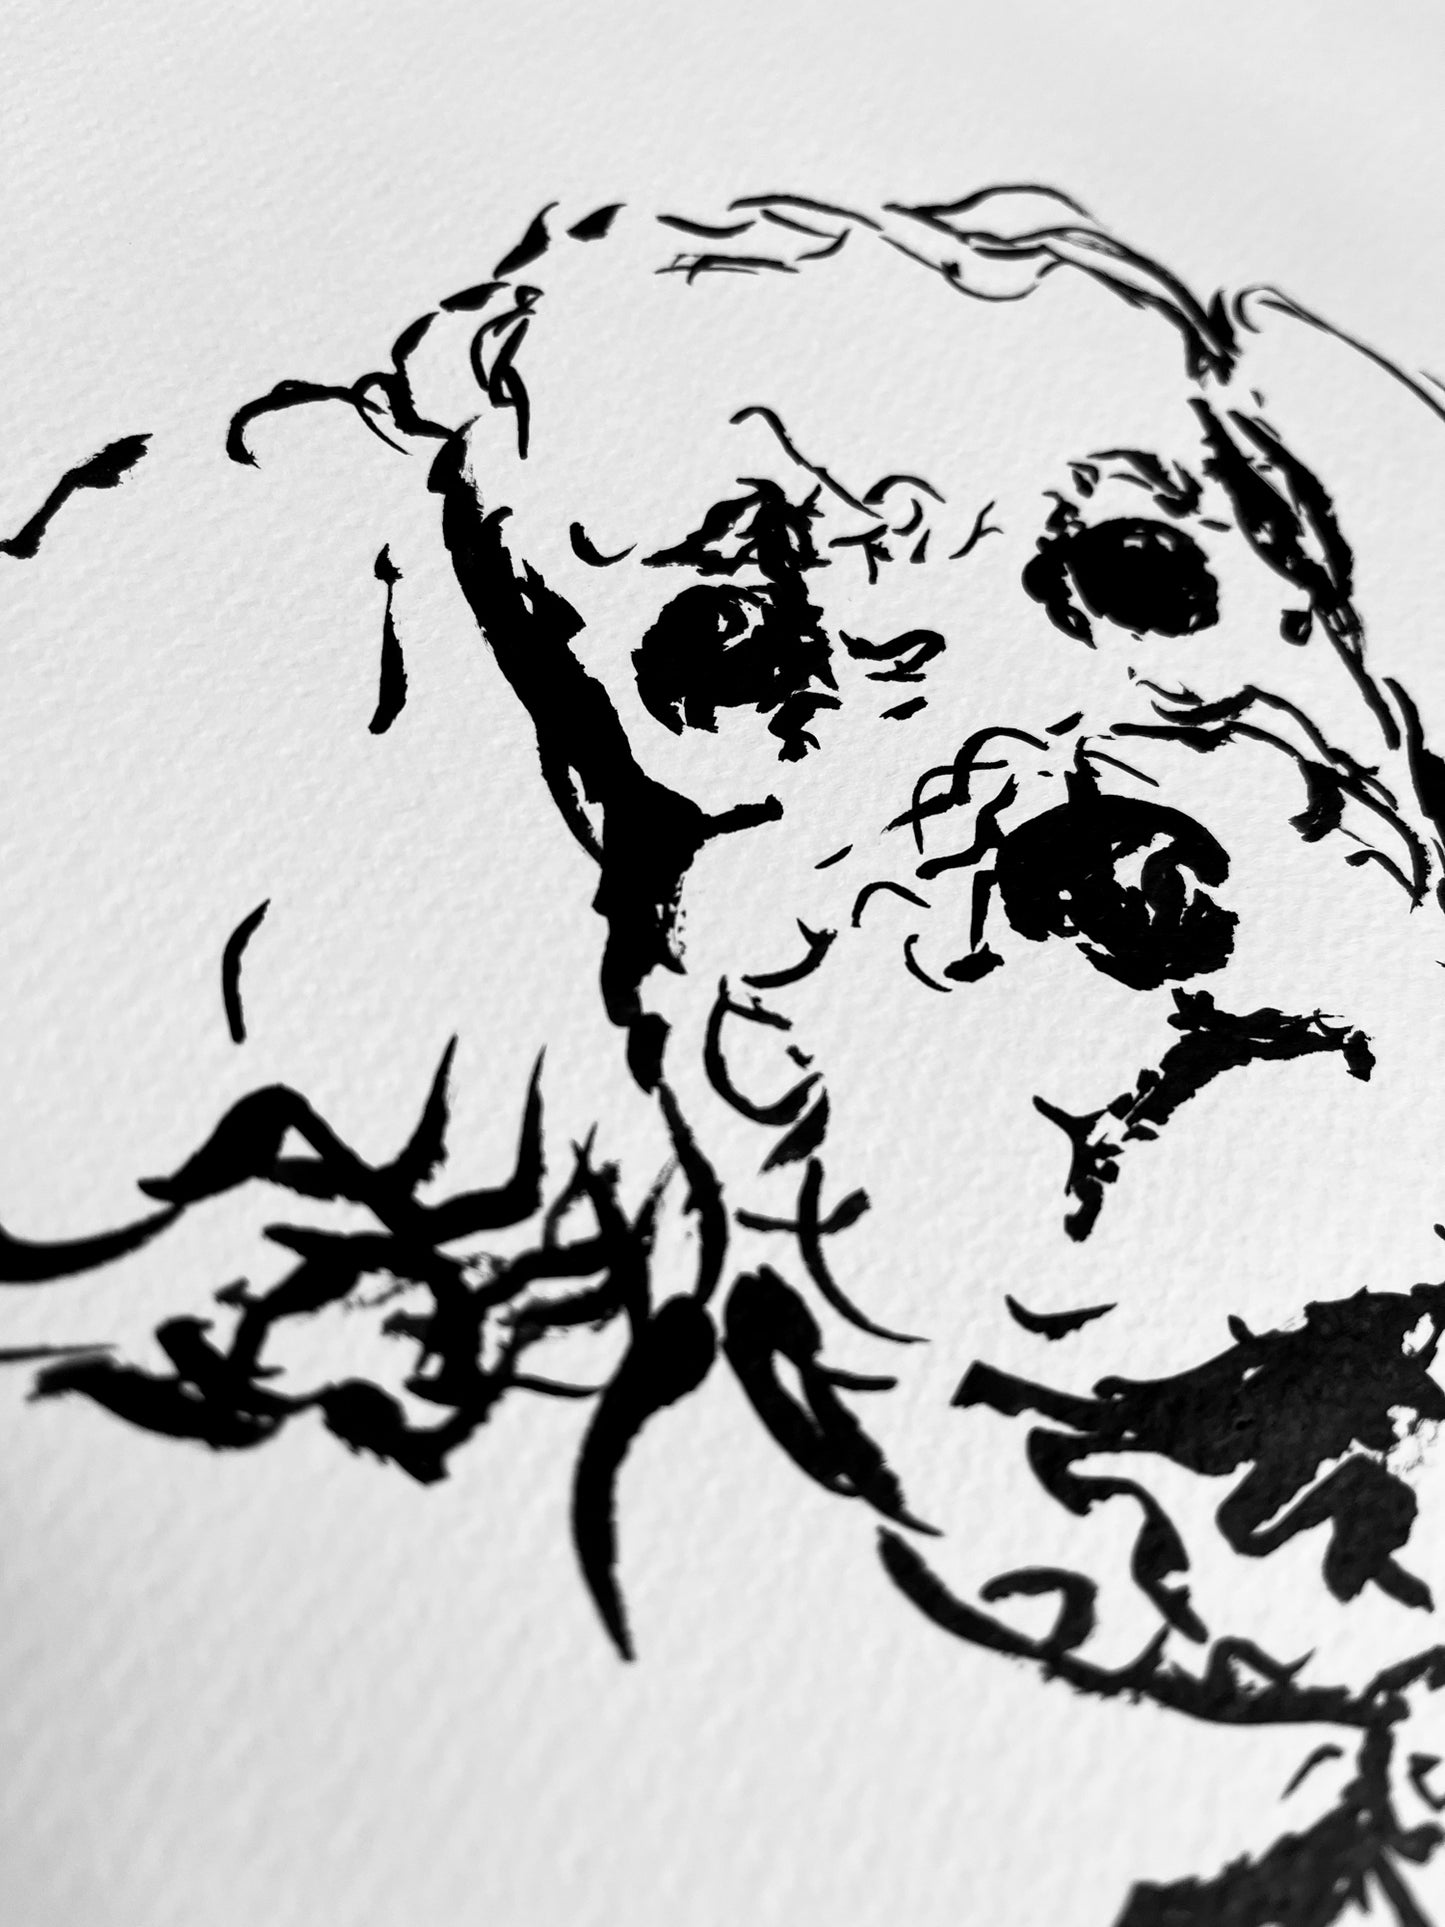 CUSTOM INK PAINTED PET PORTRAIT